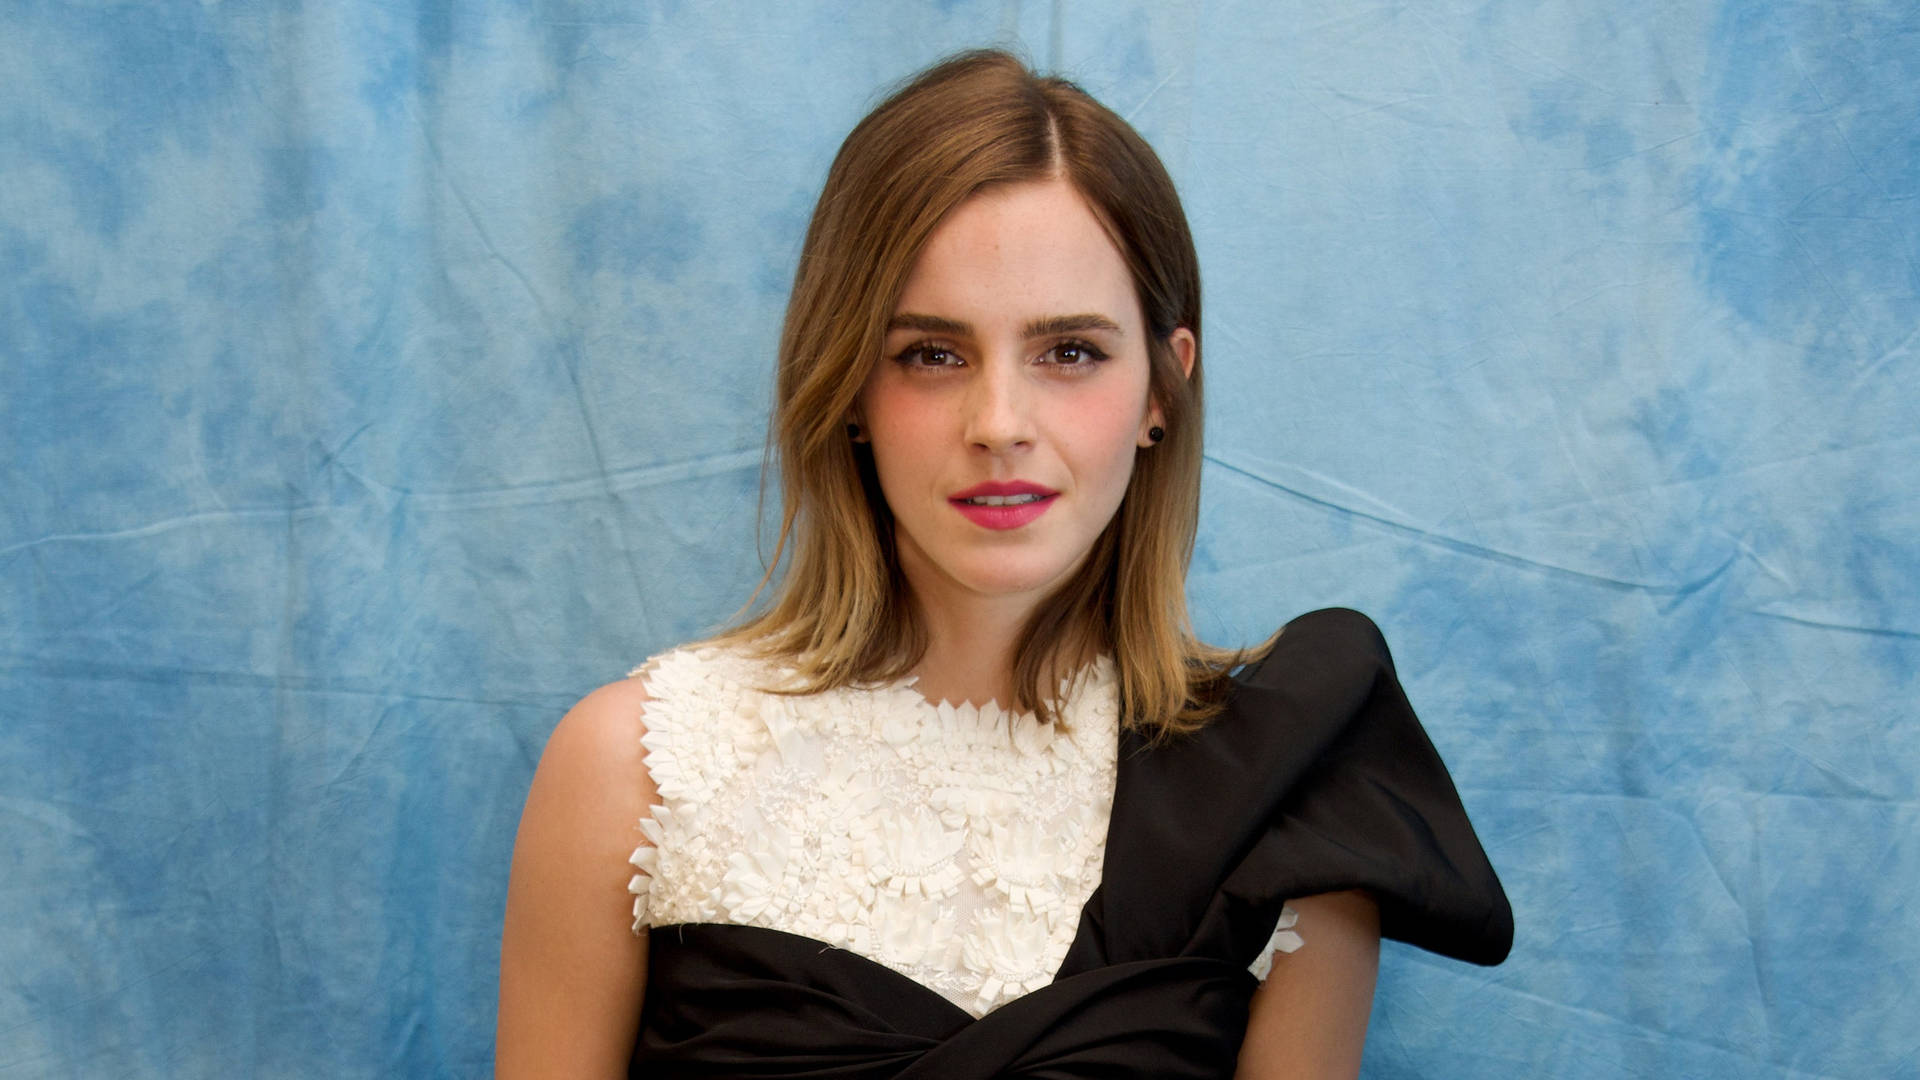 Emma Watson 2560X1440 Wallpaper and Background Image